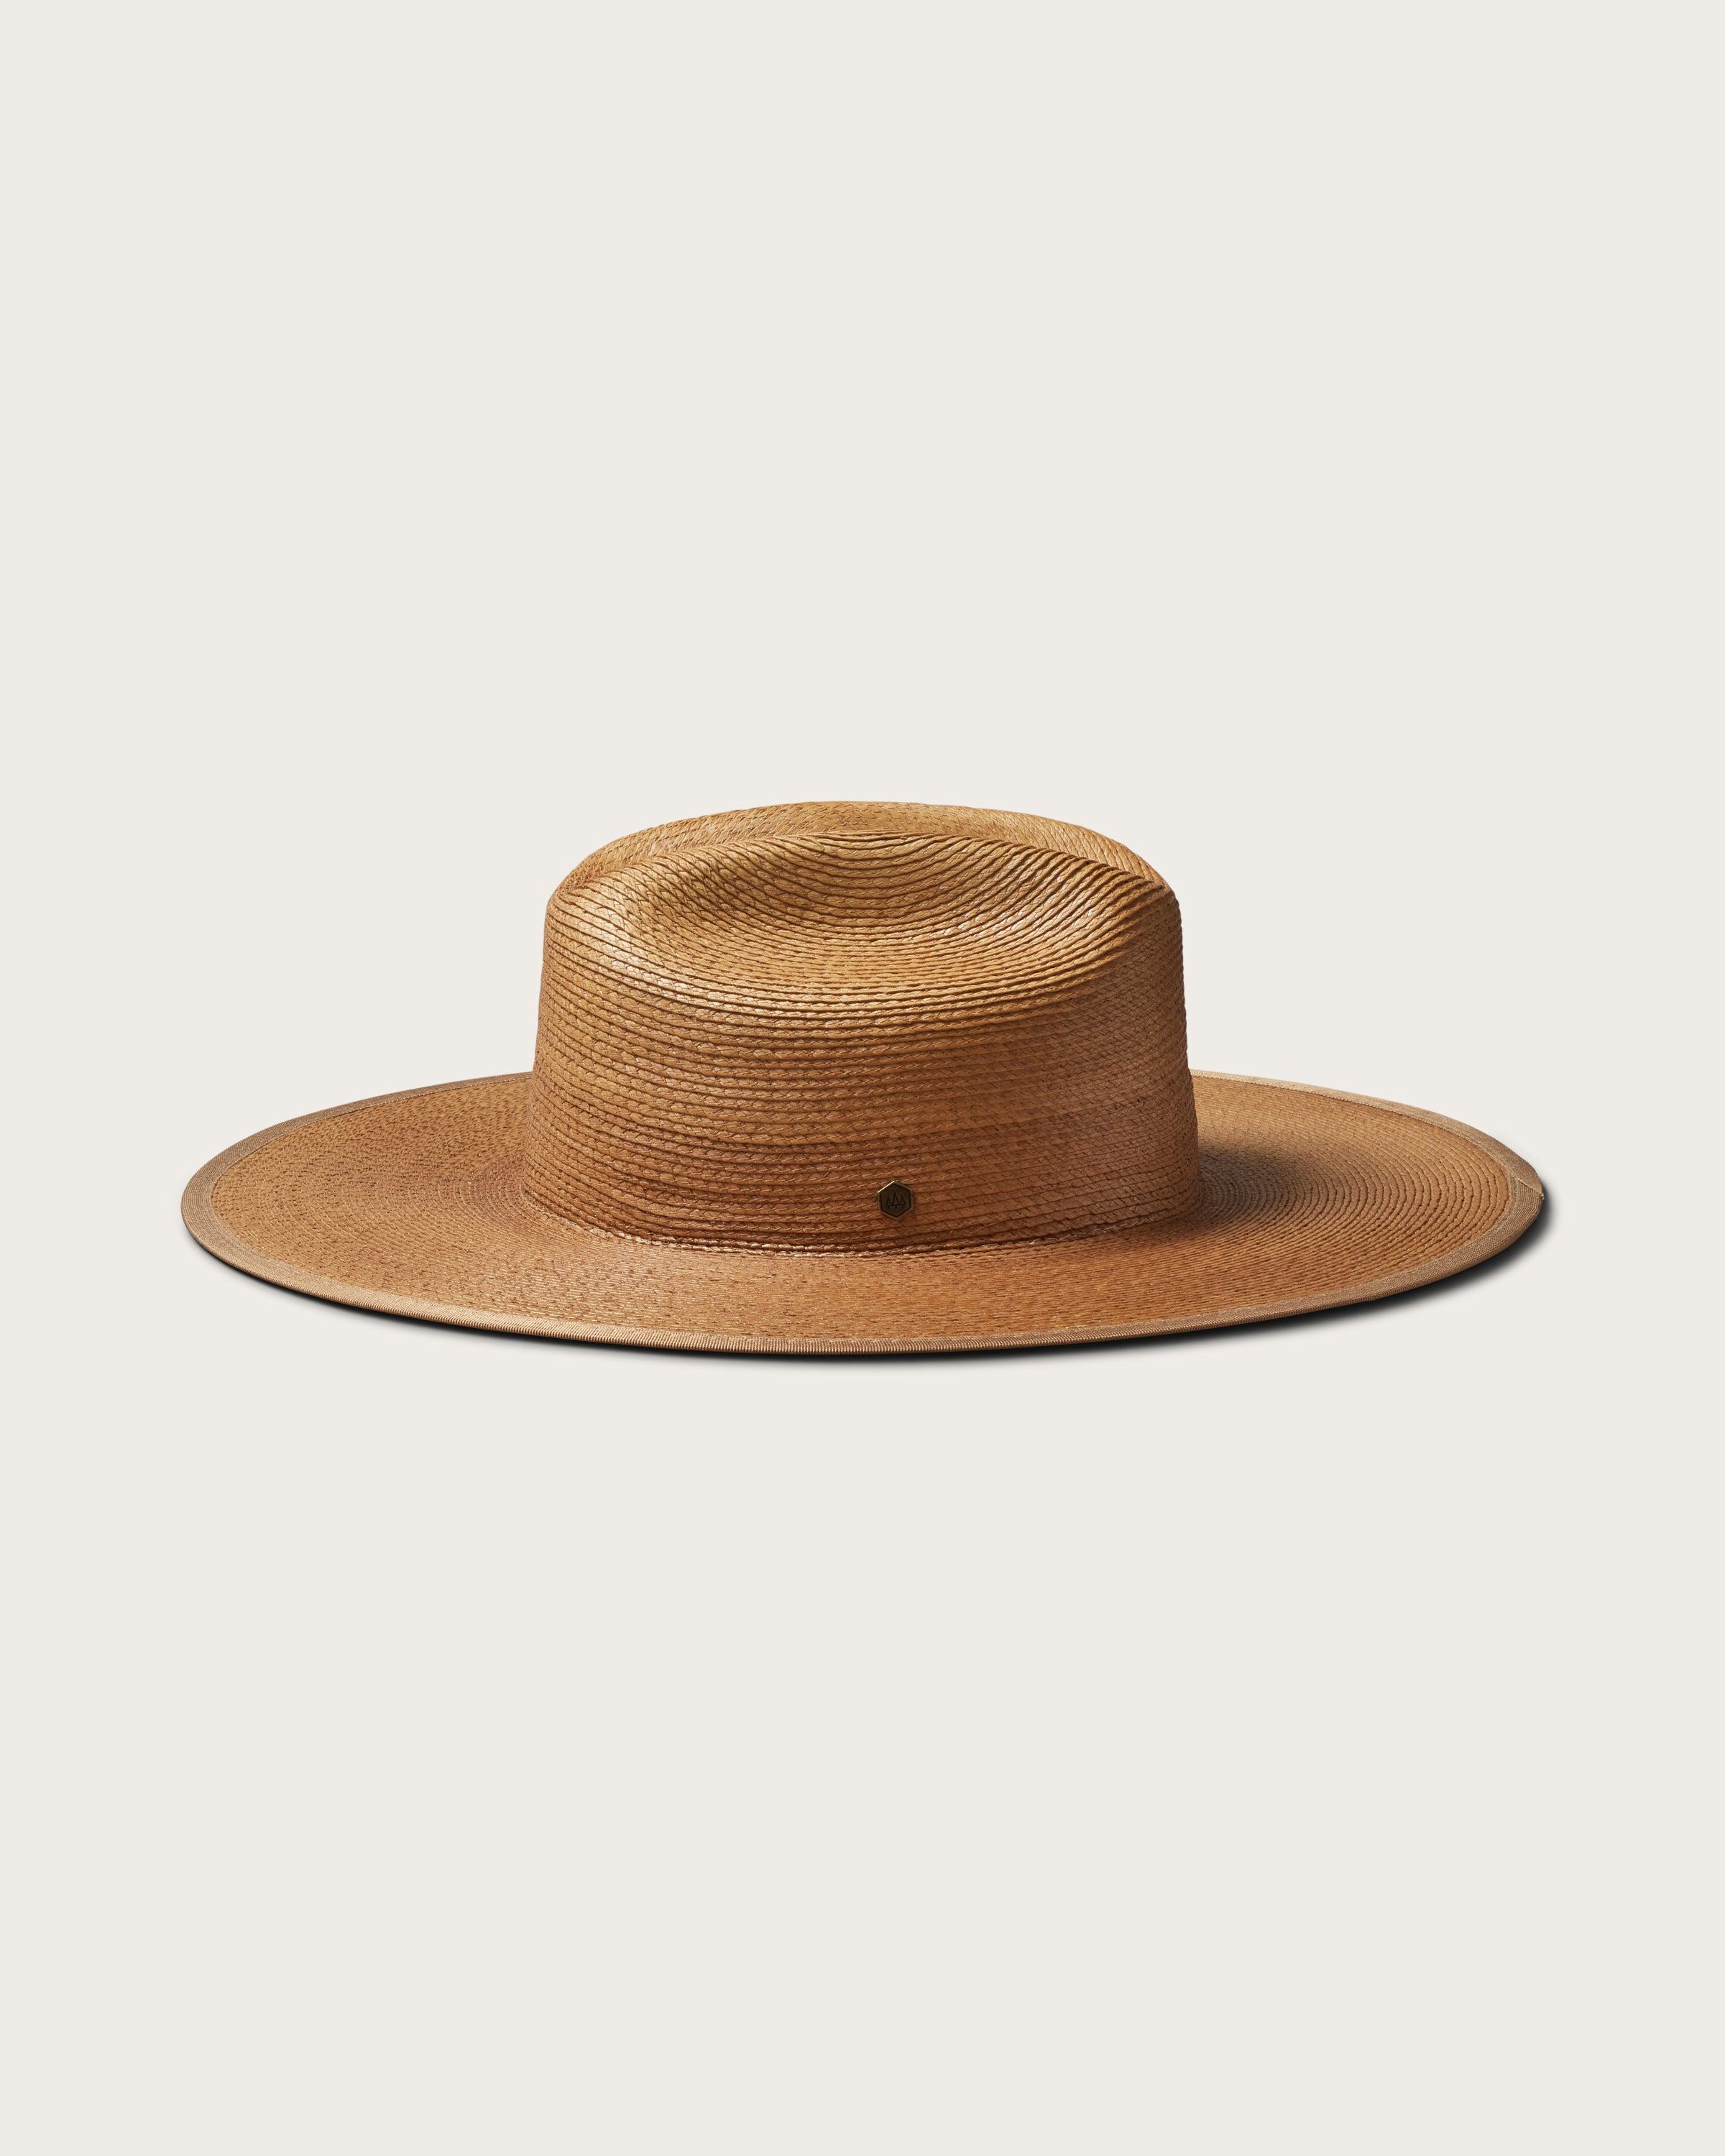 Toluca in Saddle - undefined - Hemlock Hat Co. Premium